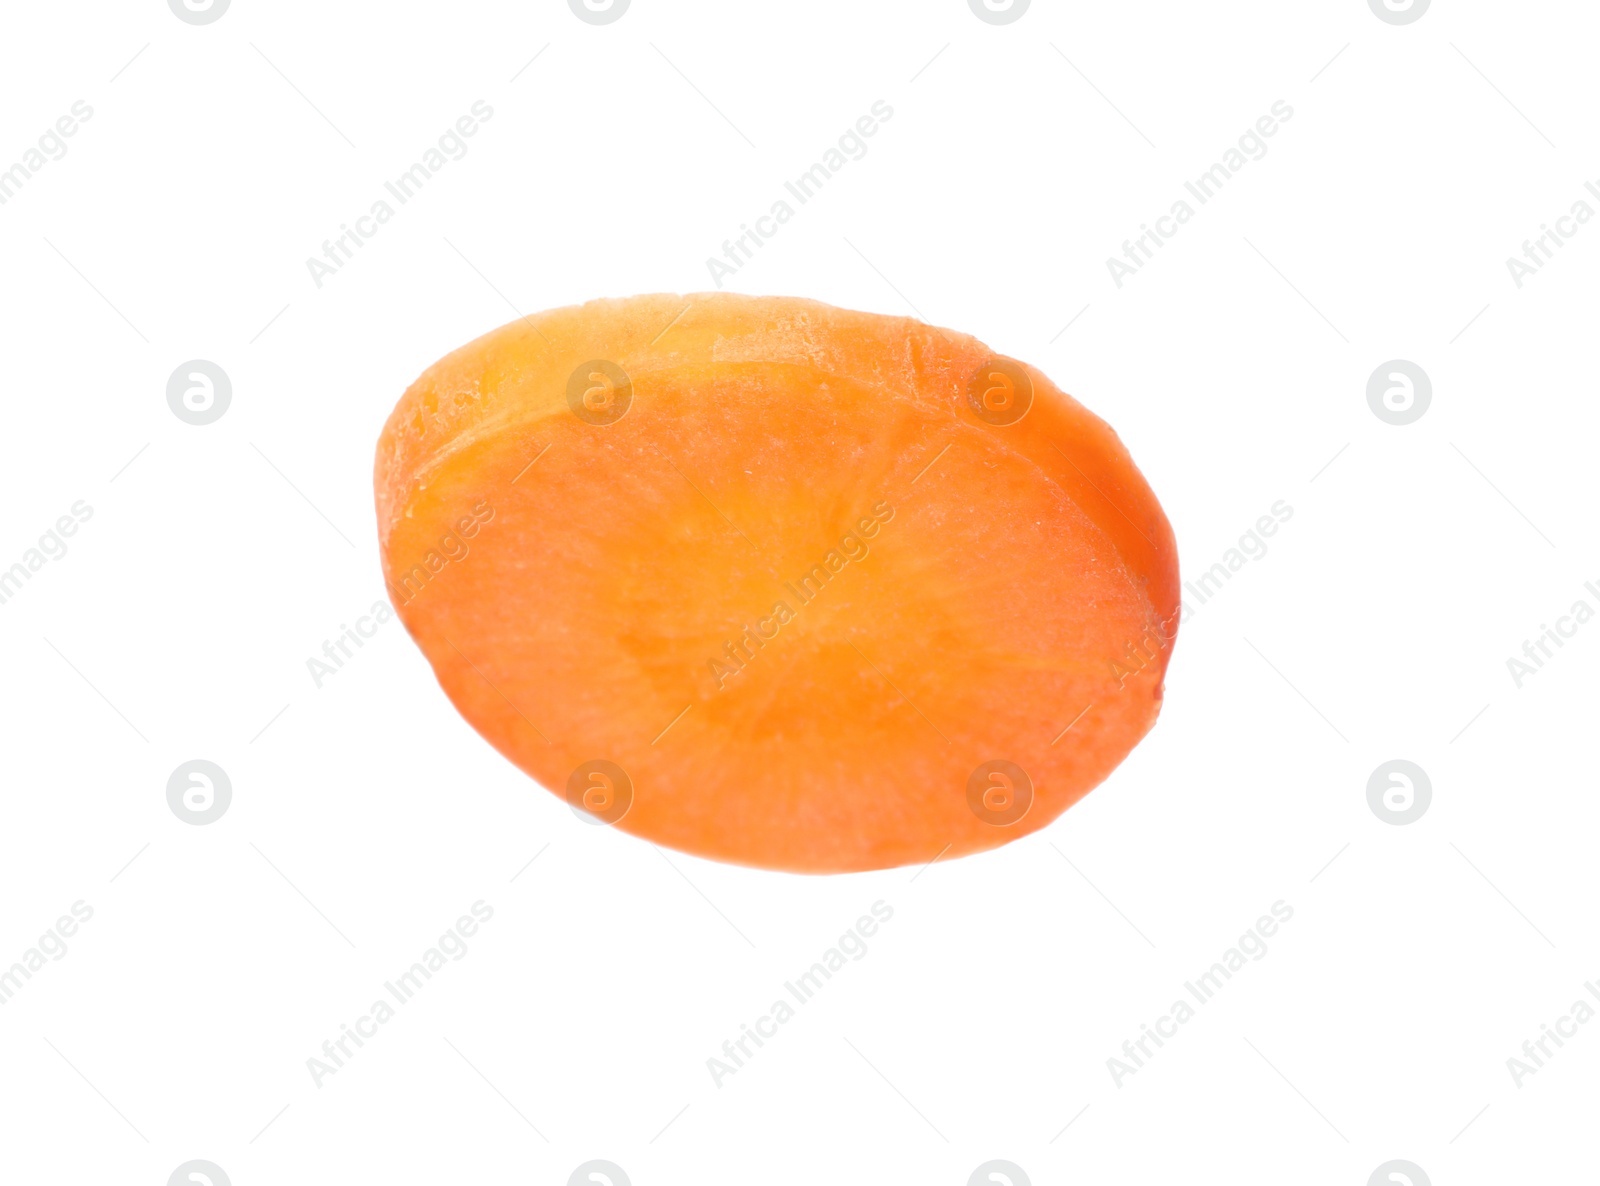 Photo of Cut fresh ripe carrot on white background